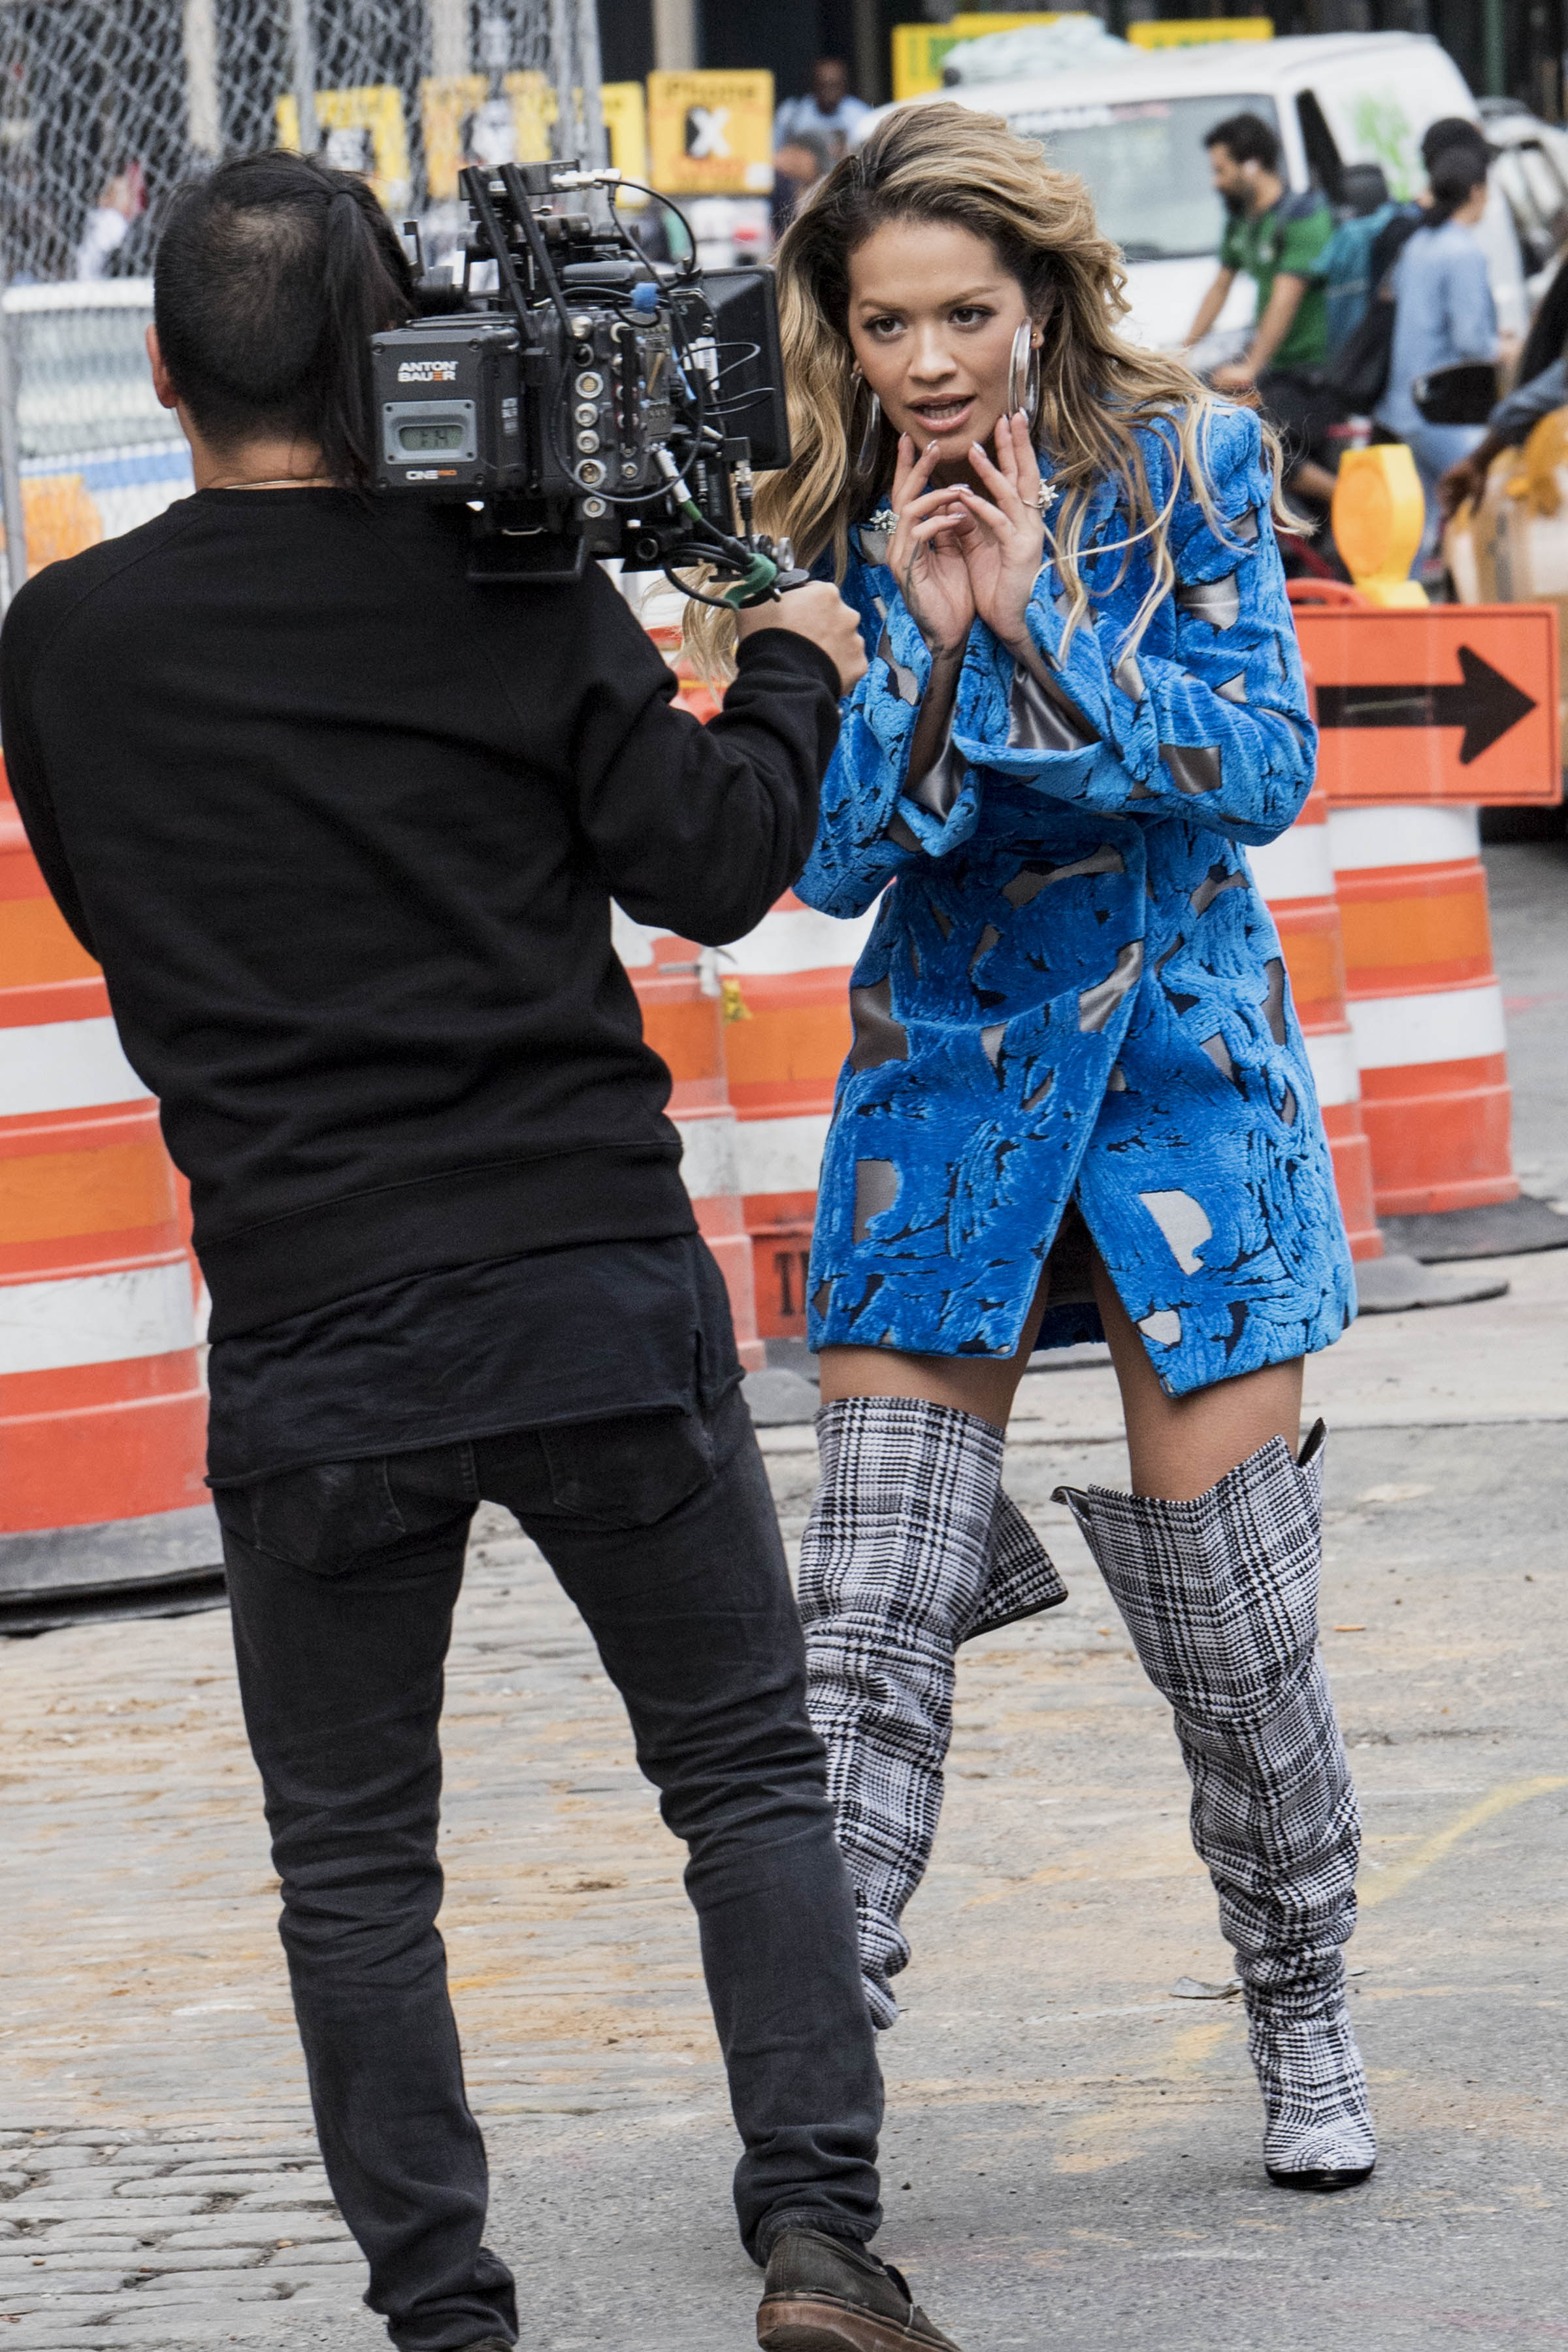 Rita Ora upskirt on Music Video Set in NY 13x HQ photos 16.jpg